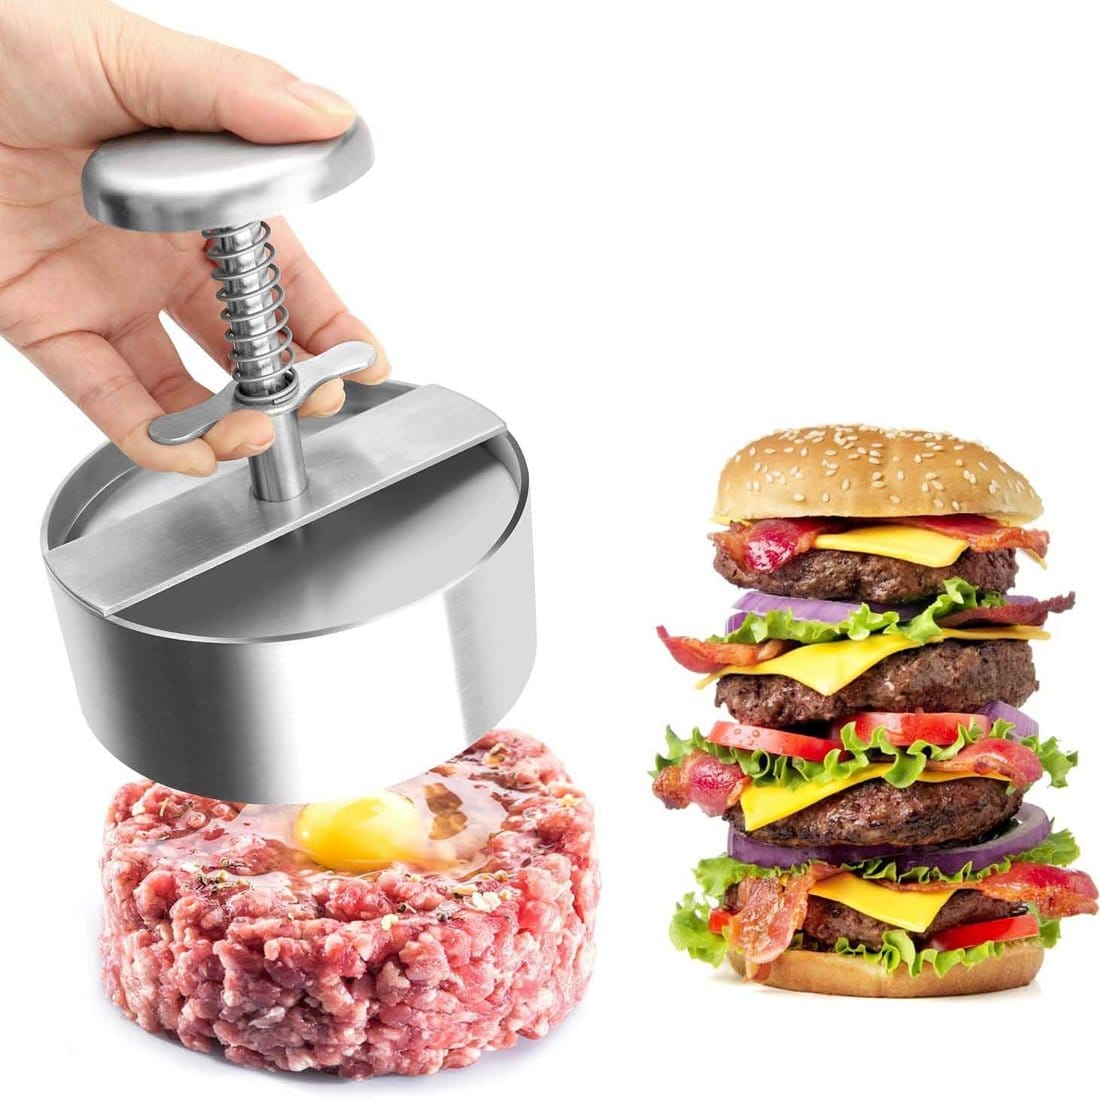 Manual meat press for hamburger patties